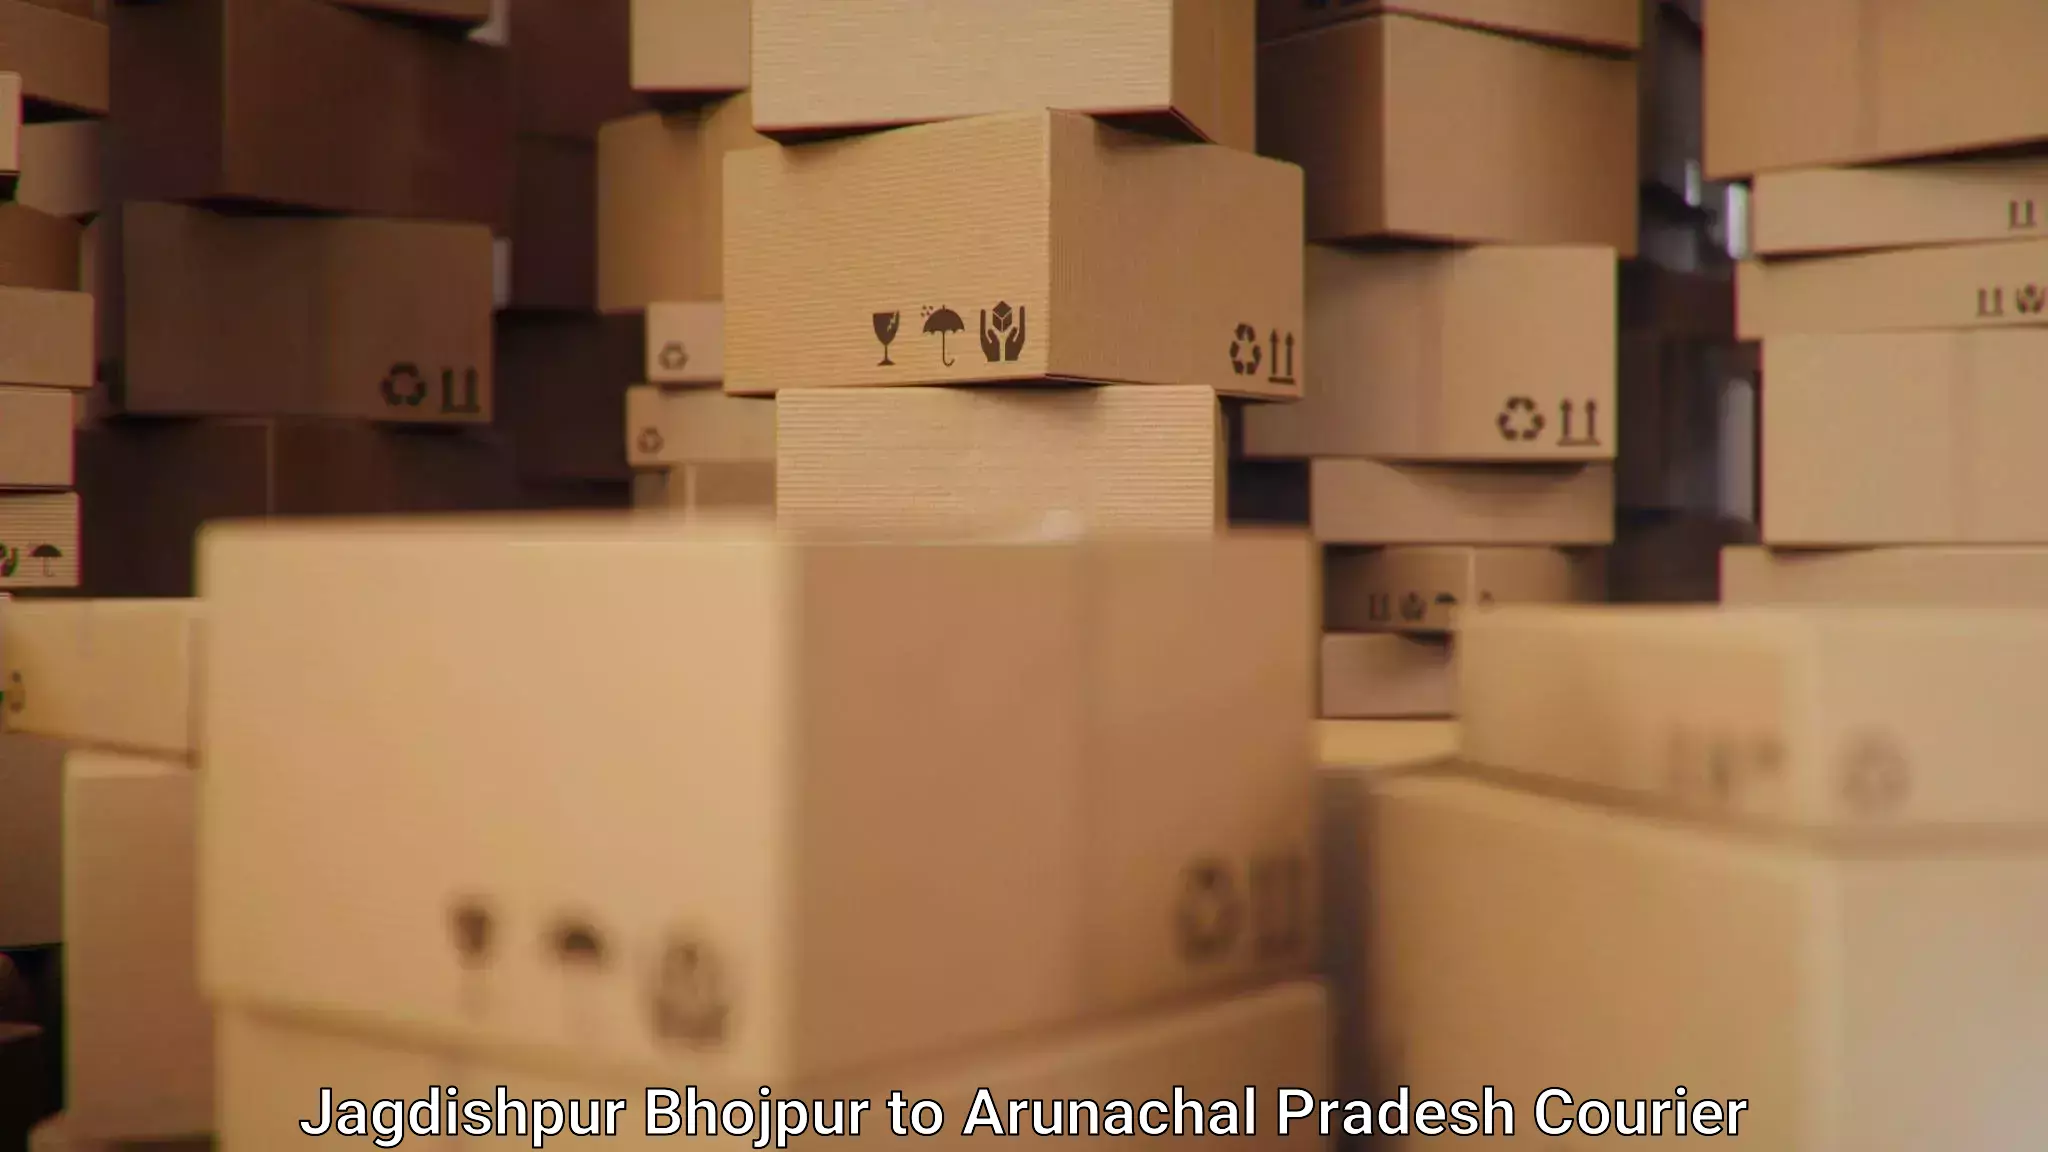 Courier service comparison Jagdishpur Bhojpur to Tirap